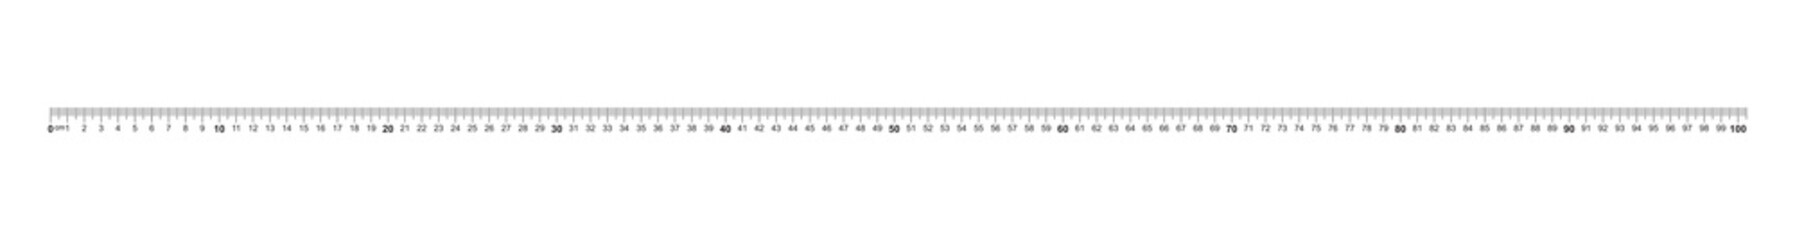 Ruler 100 centimeter. Precise measuring tool. Calibration grid.